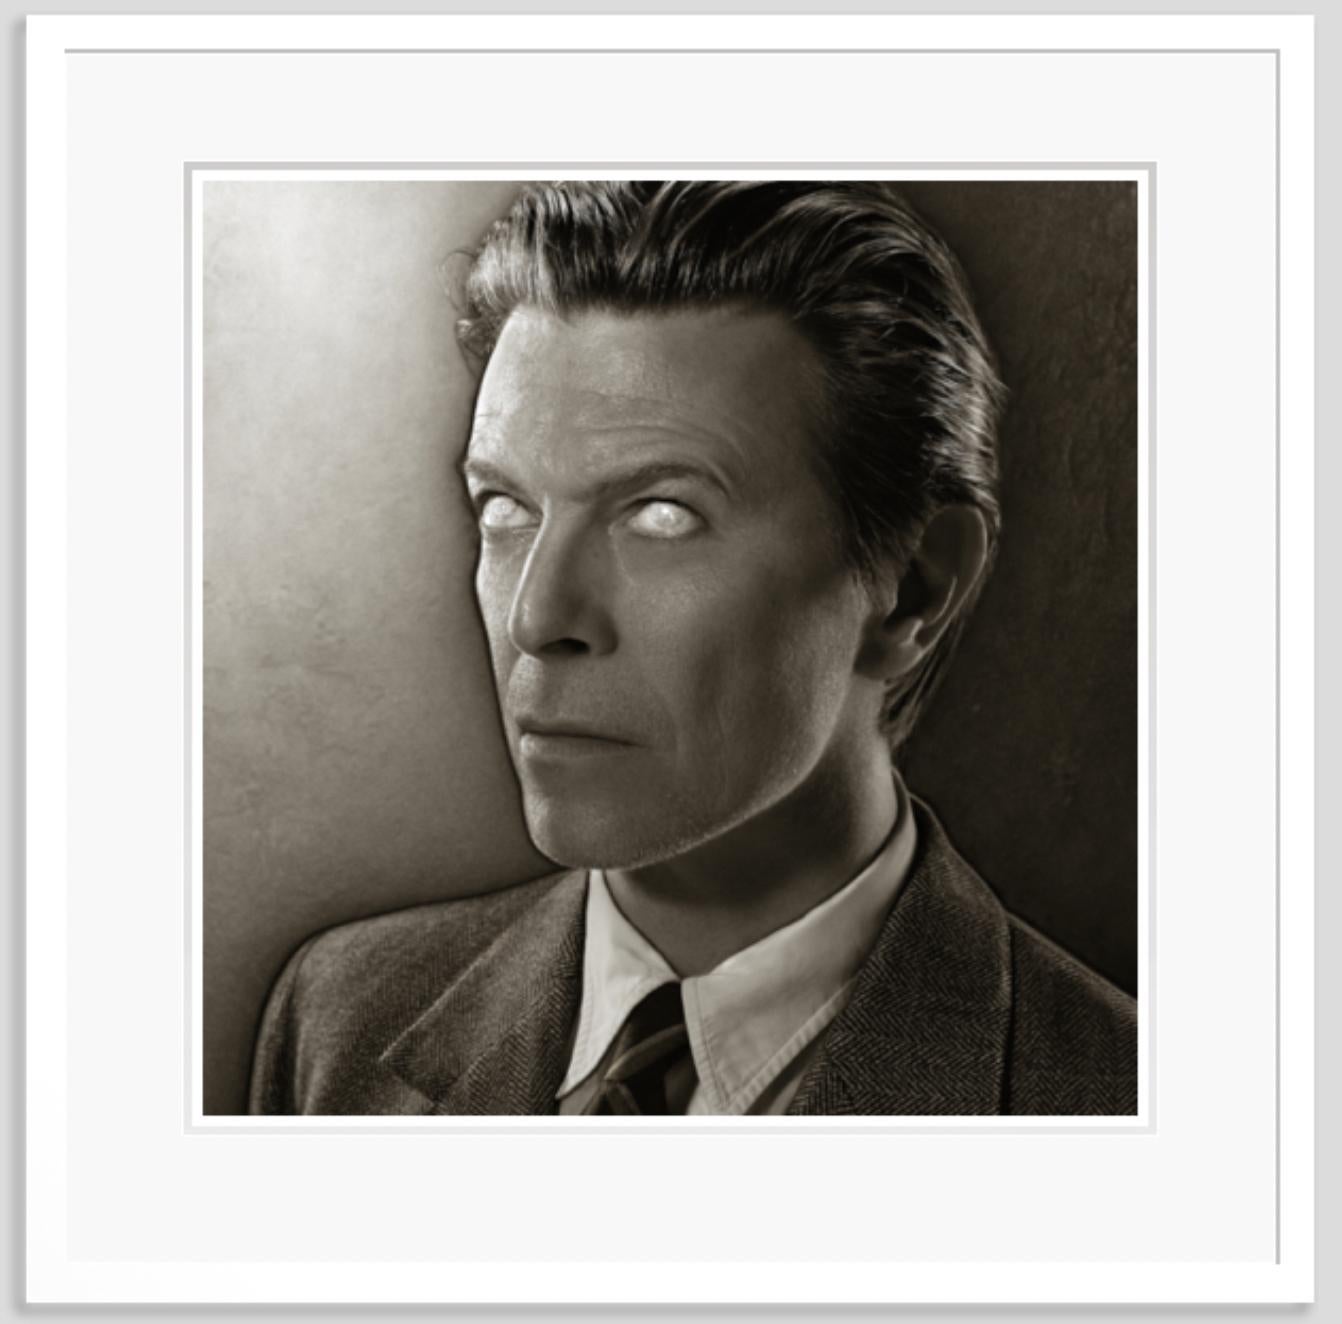 David Bowie Heathen (Framed) - Photograph by Markus Klinko